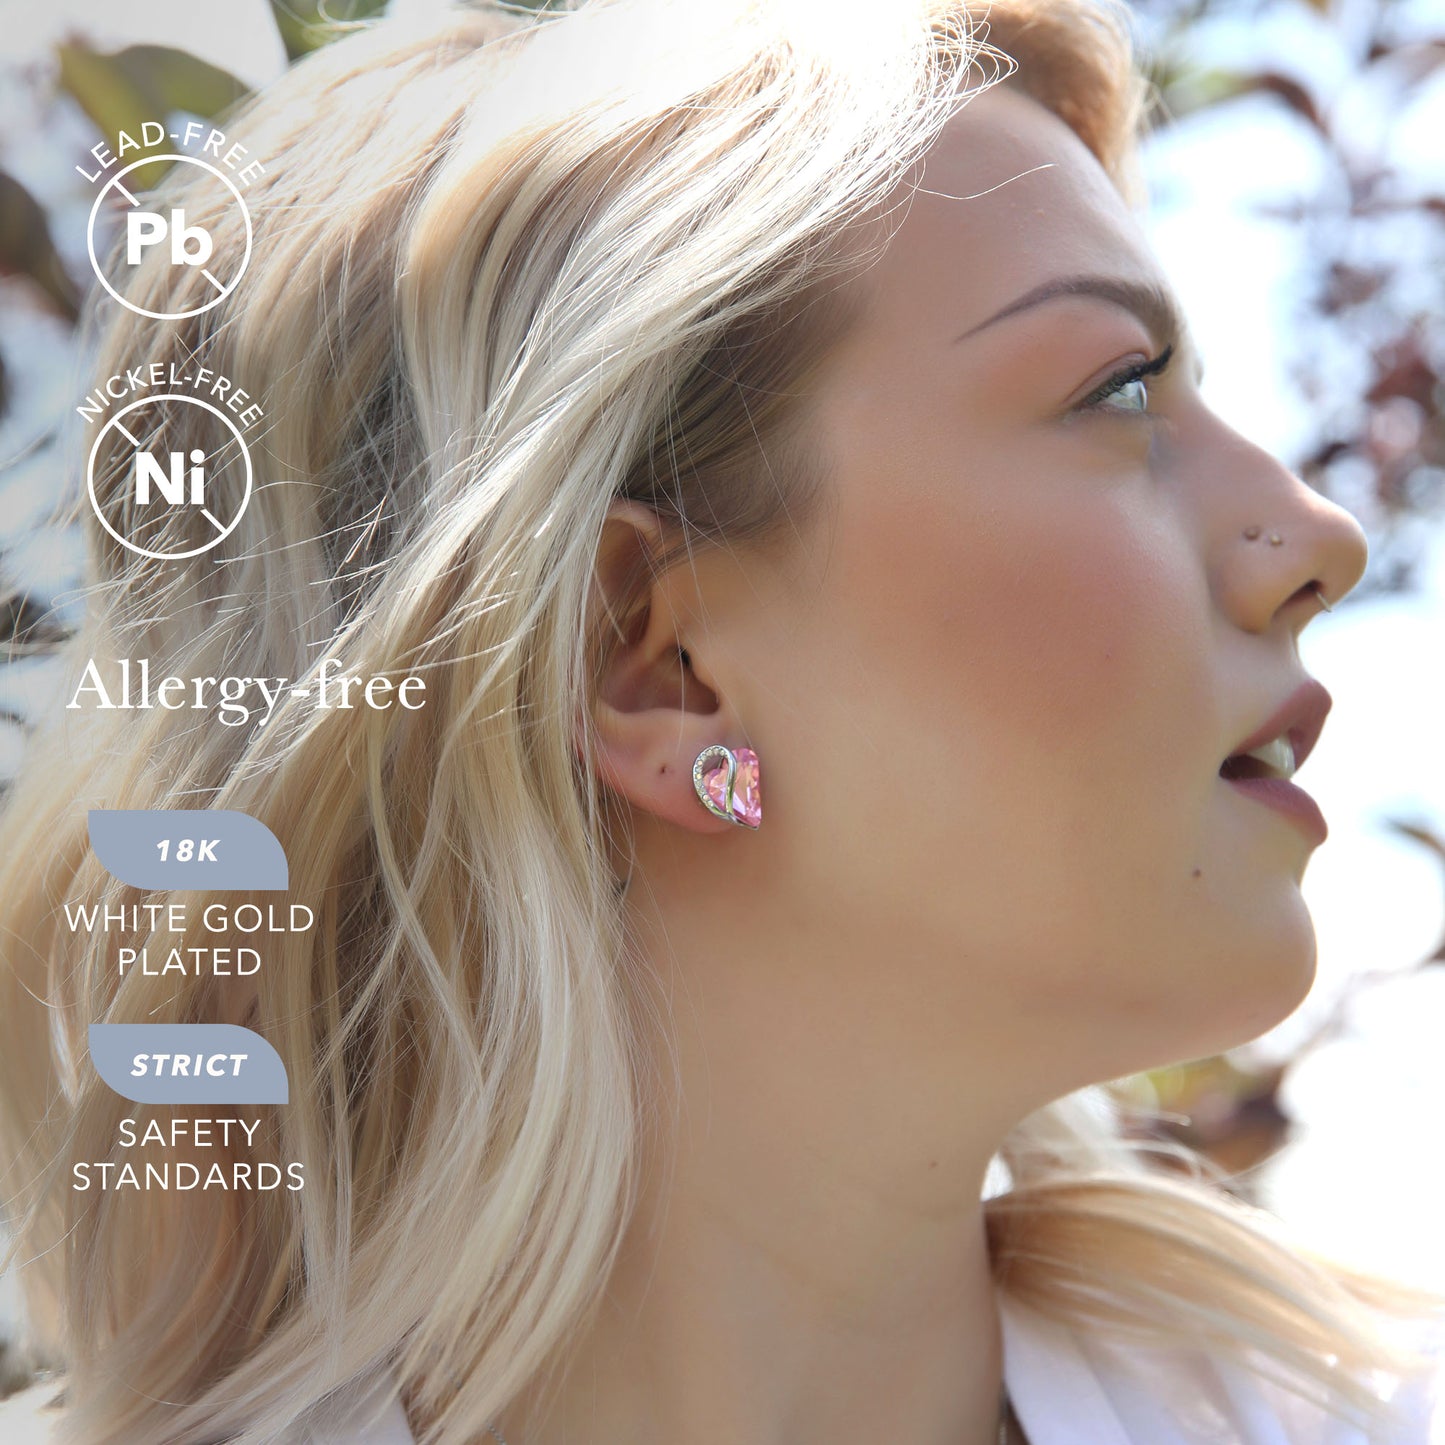 Leafael Infinity Love Heart Stud Earrings with Birthstone Crystal Women's Gifts, Silver-tone